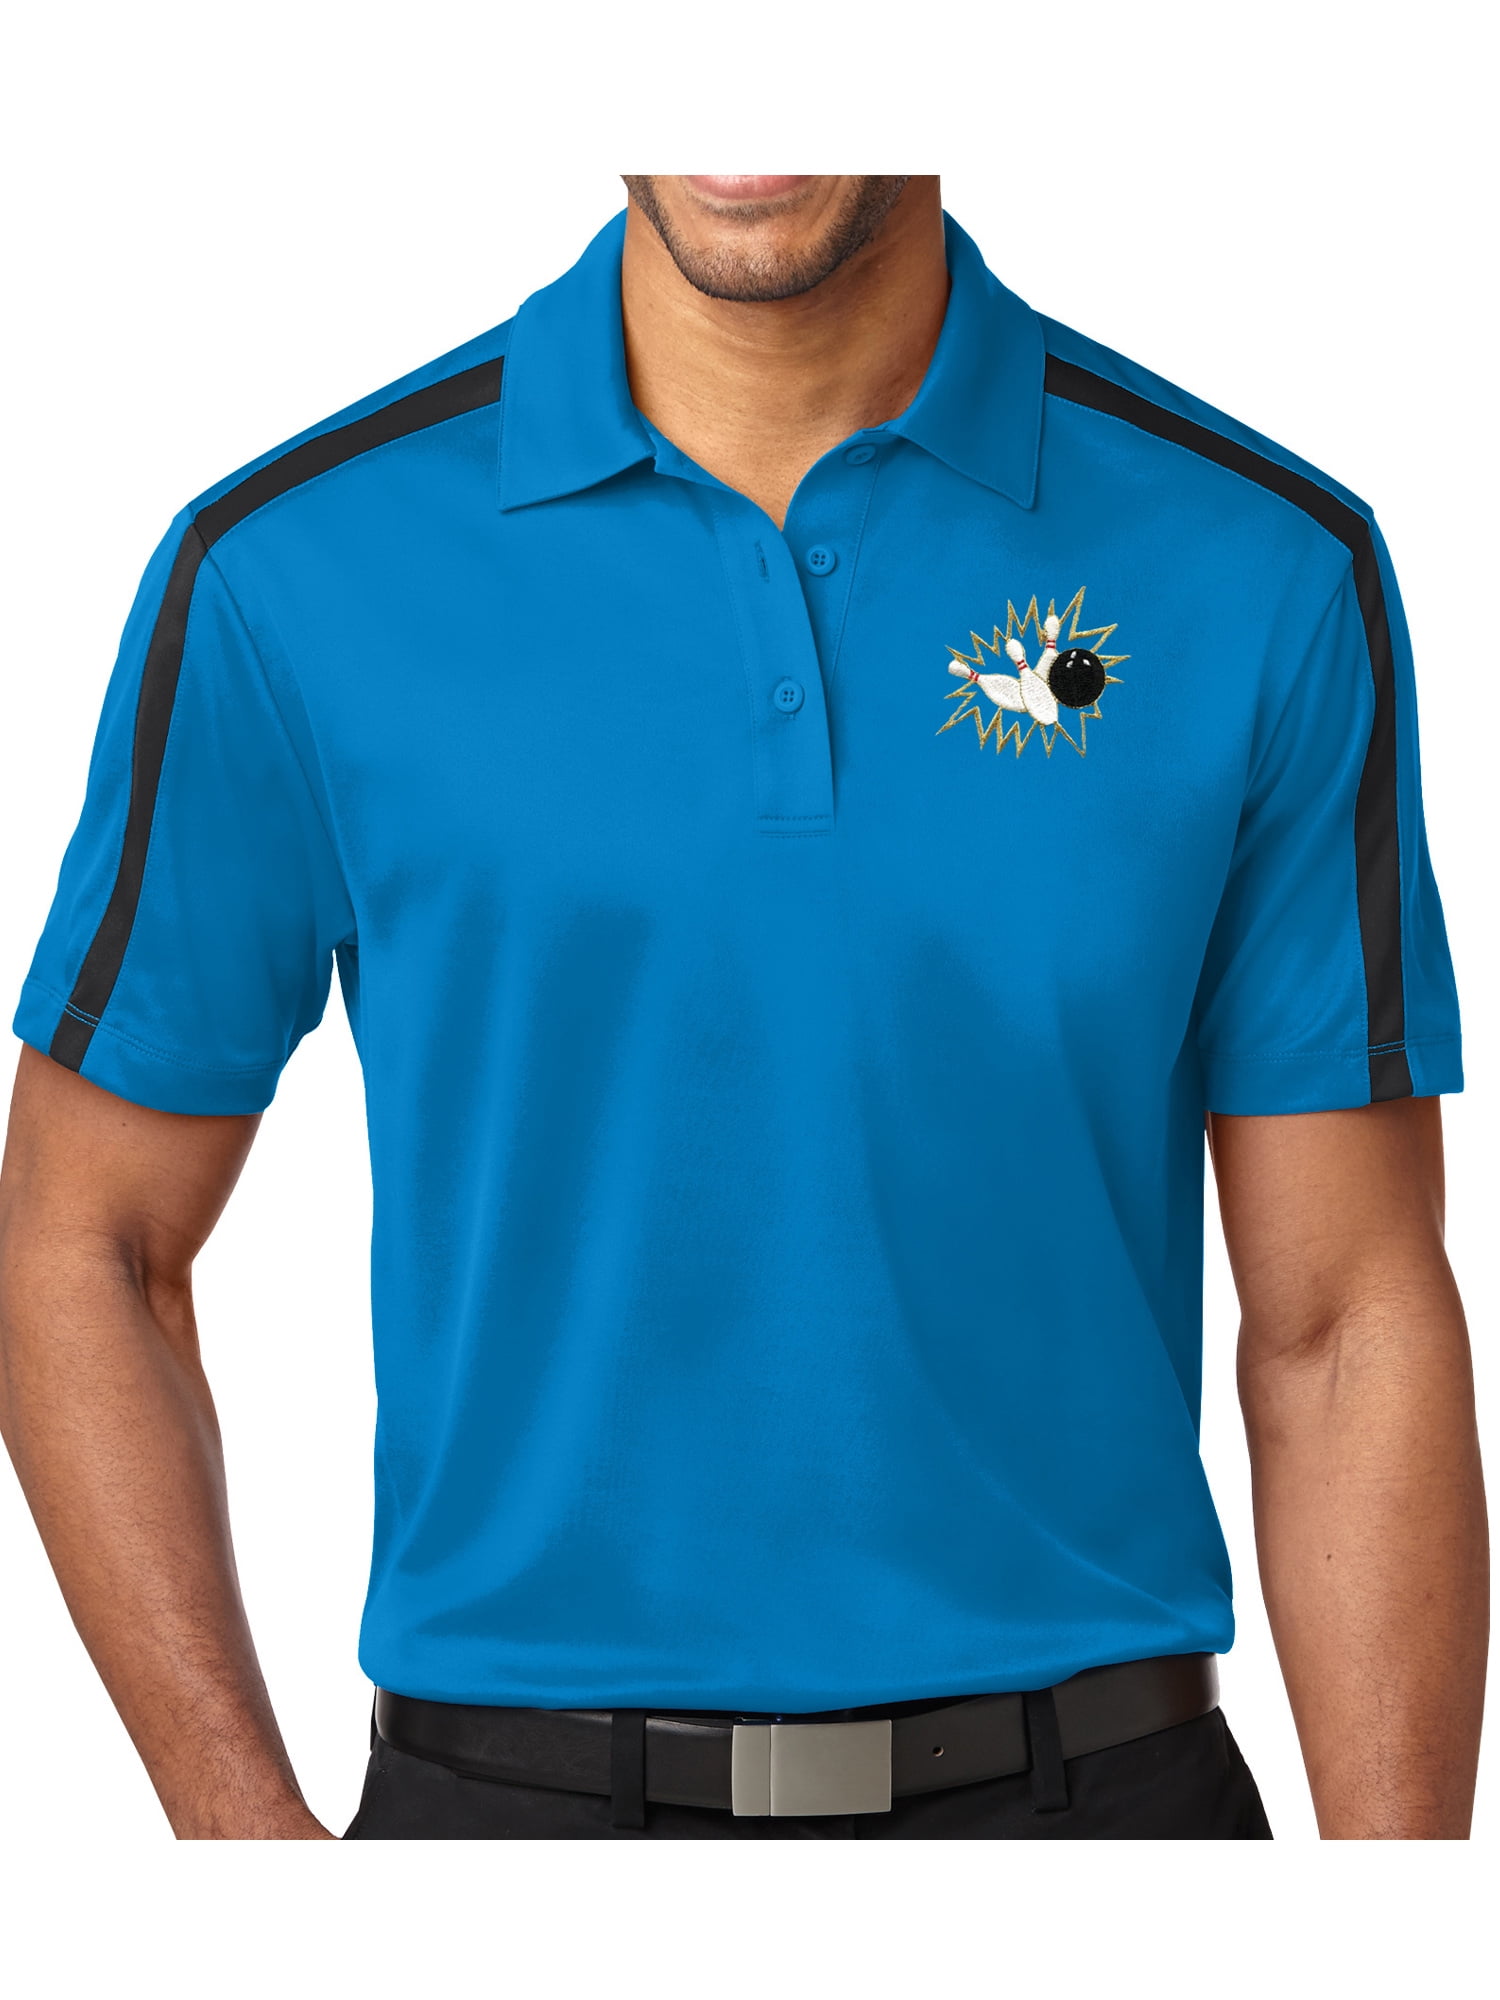 Buy Cool Shirts - Mens Bowling Pins Crashing Premium Polo Shirt ...